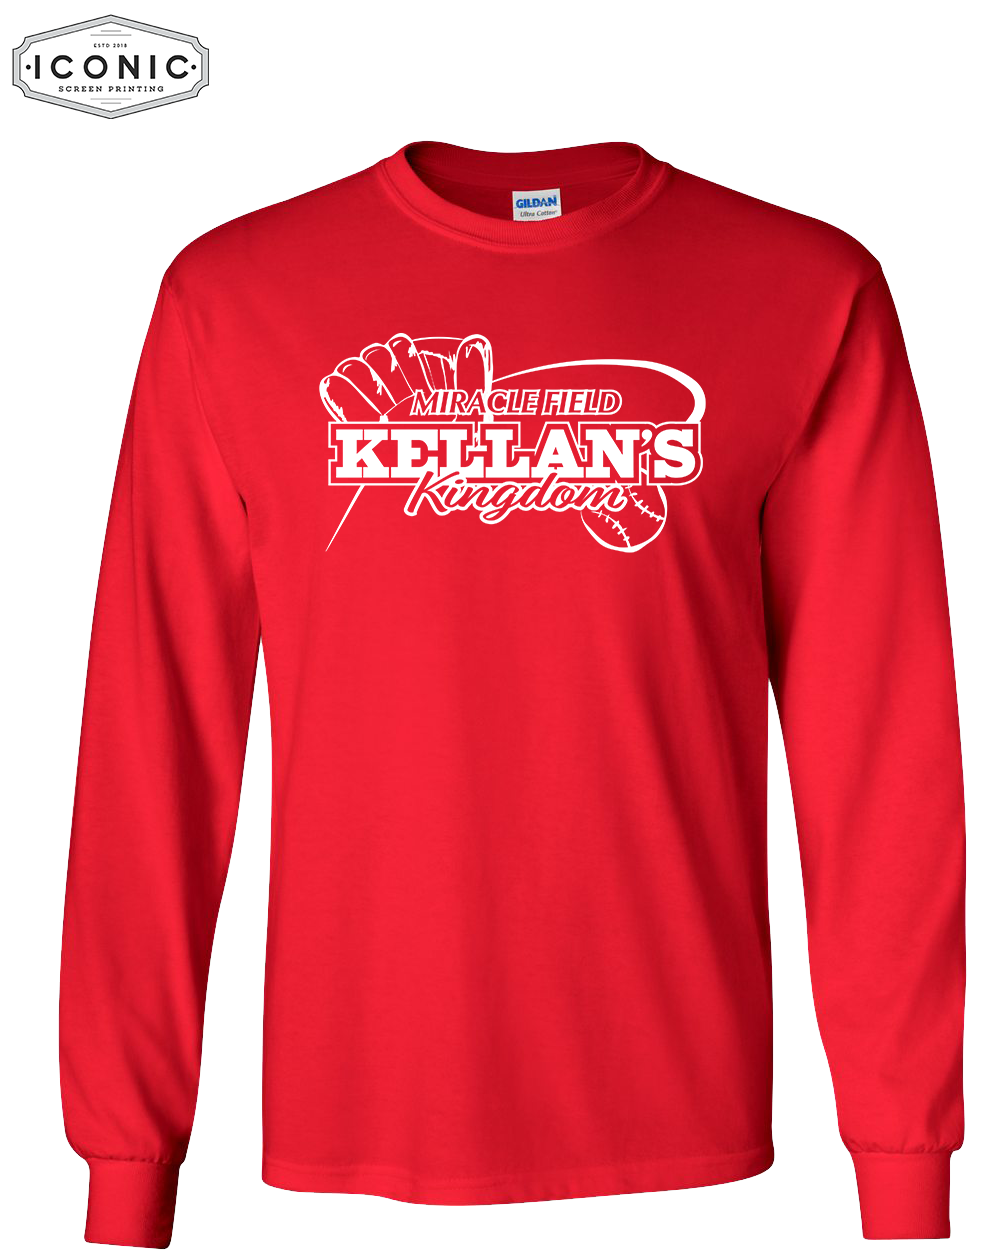 Kellan's Kingdom - Ultra Cotton Long Sleeve